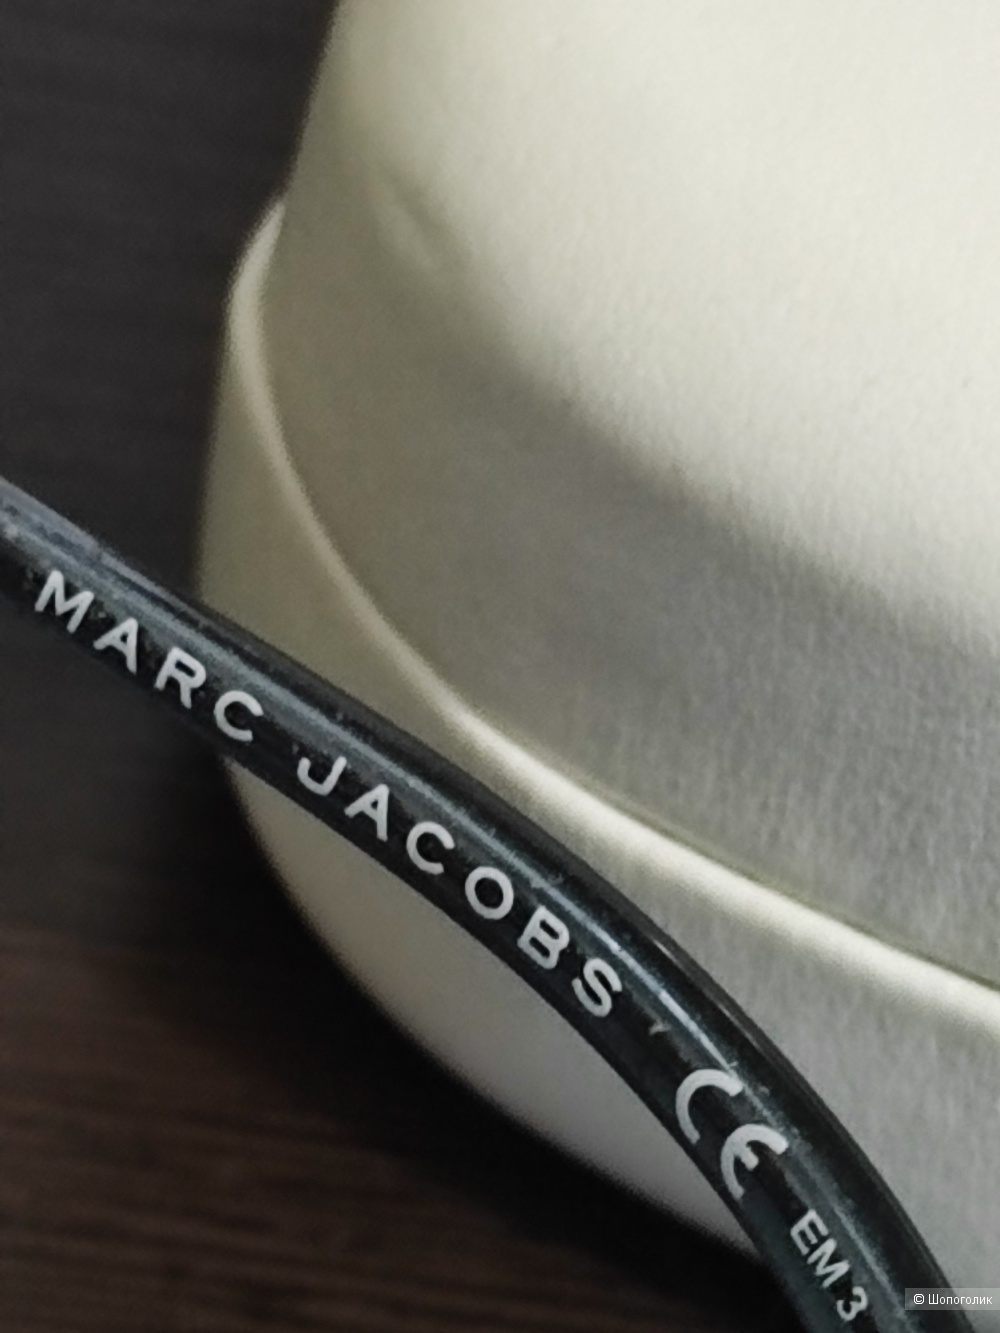 Очки Marc Jacobs солнцезащитные